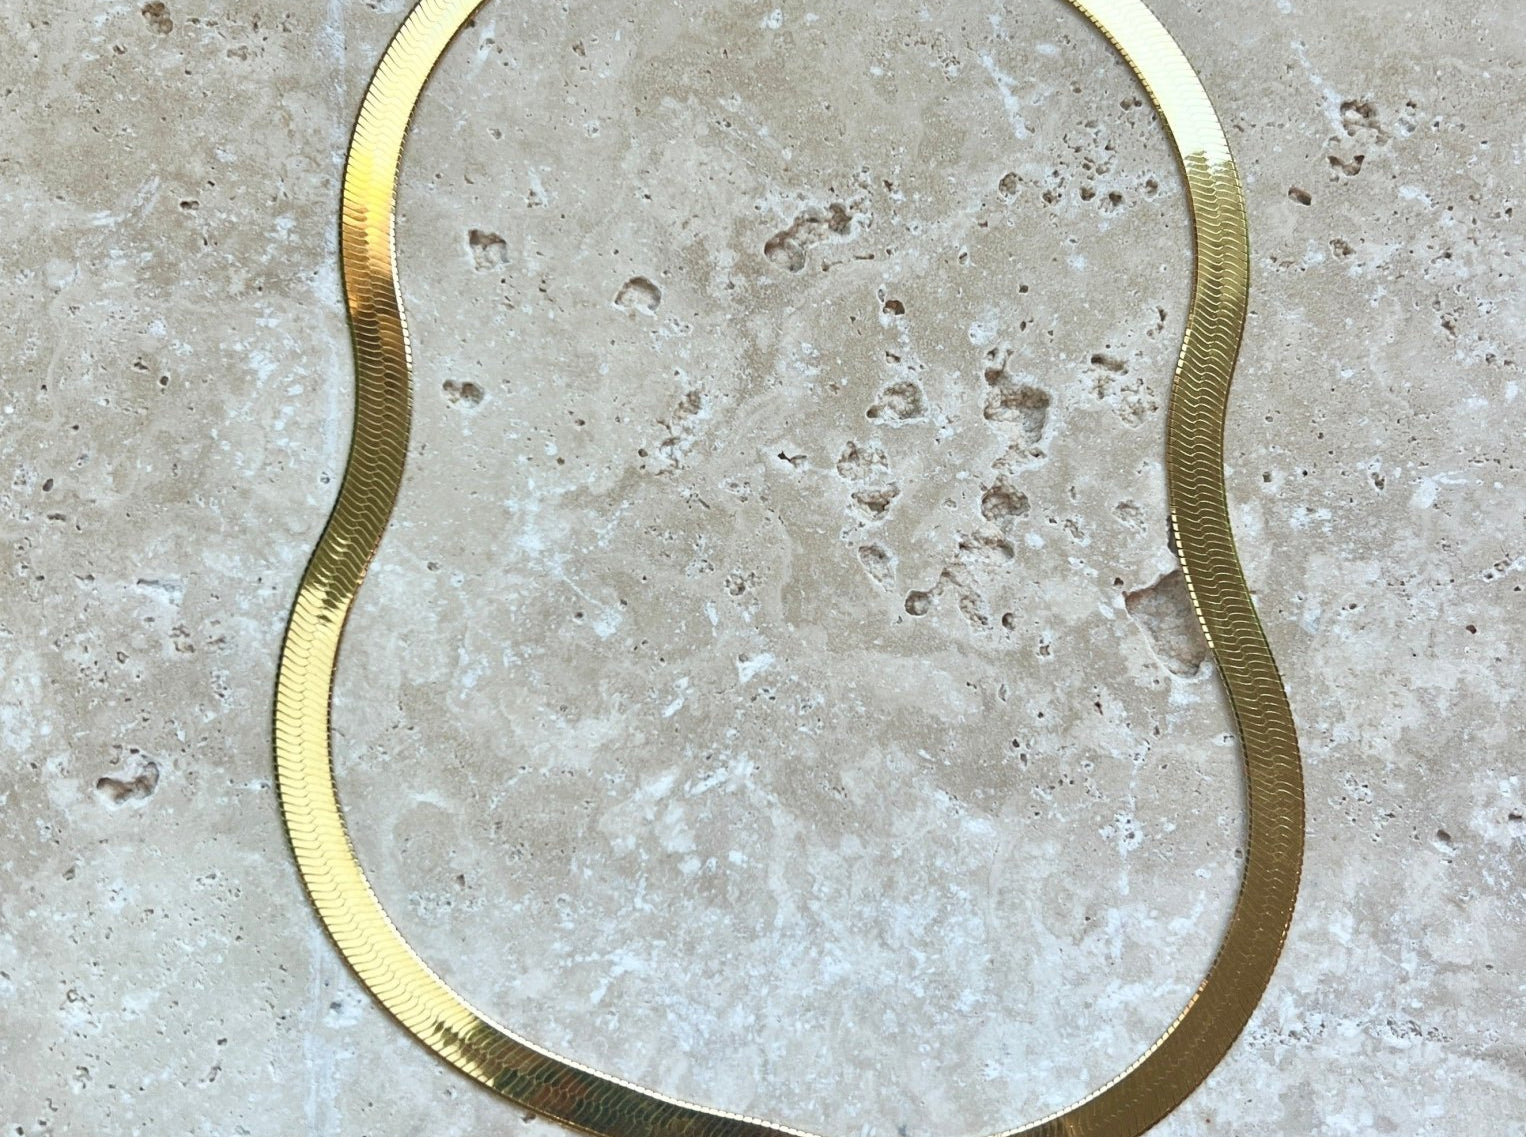 Bold Gold Herringbone Chain Necklace - Flat Gold Chain Necklace - Dea Dia